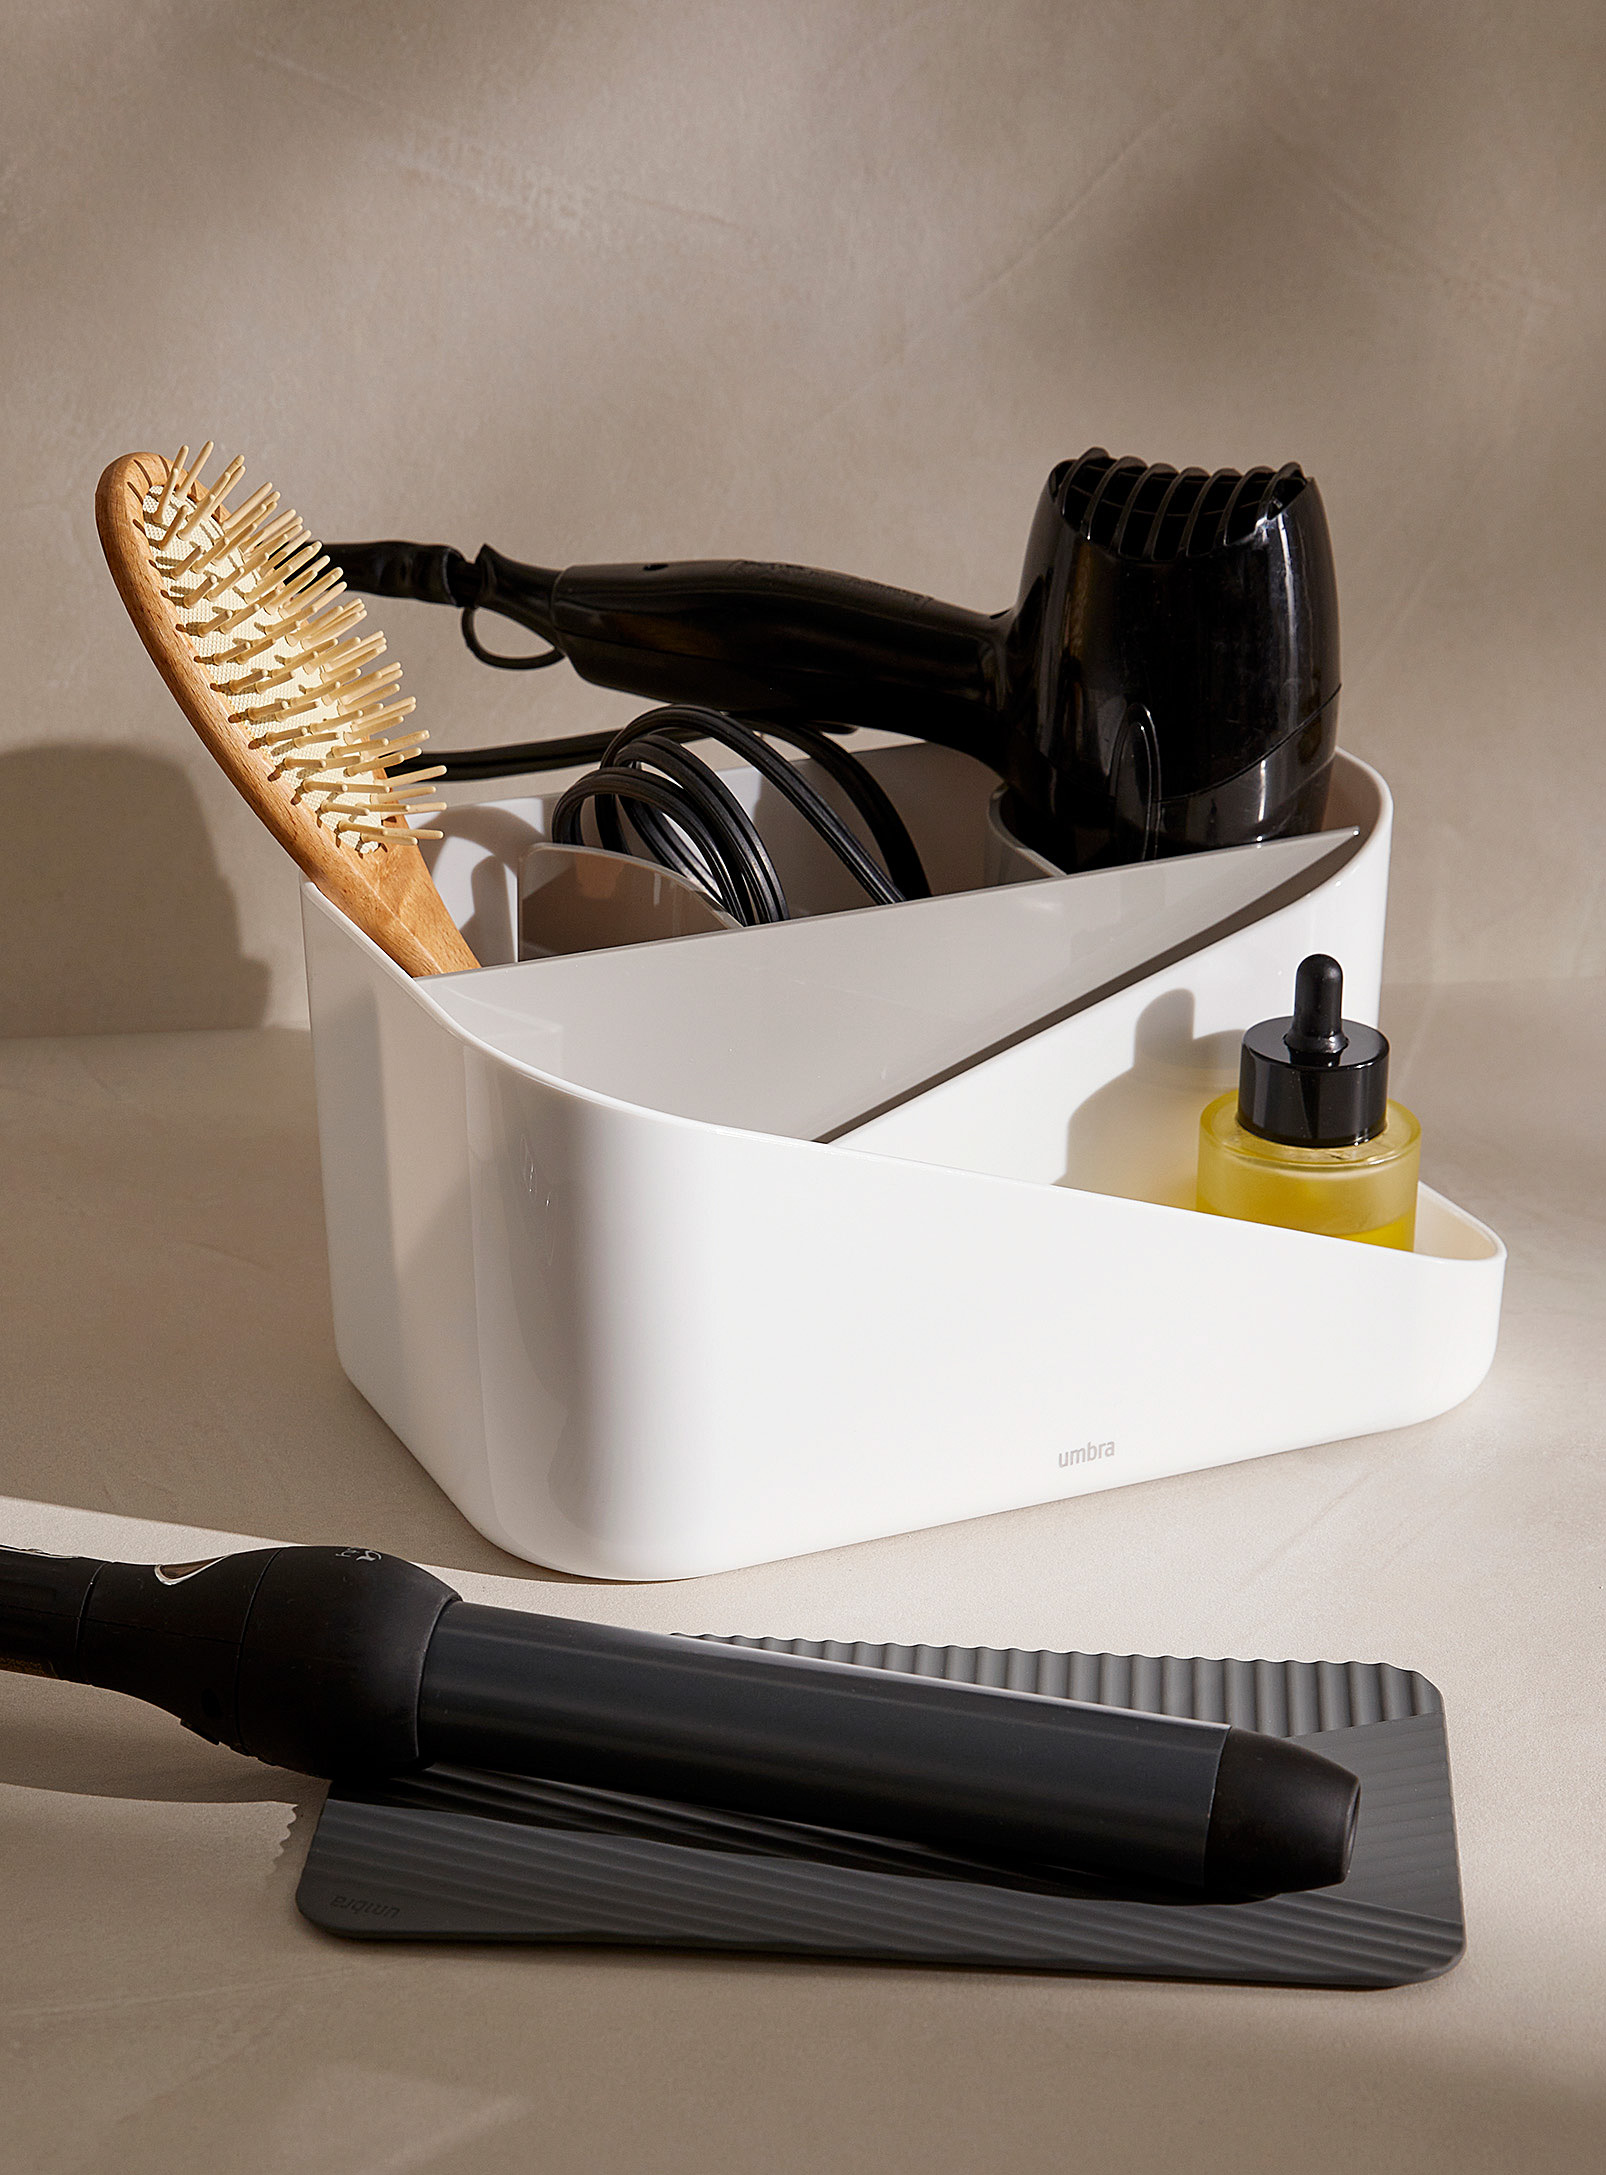 Umbra - Glam hair tools and cosmetics organizer